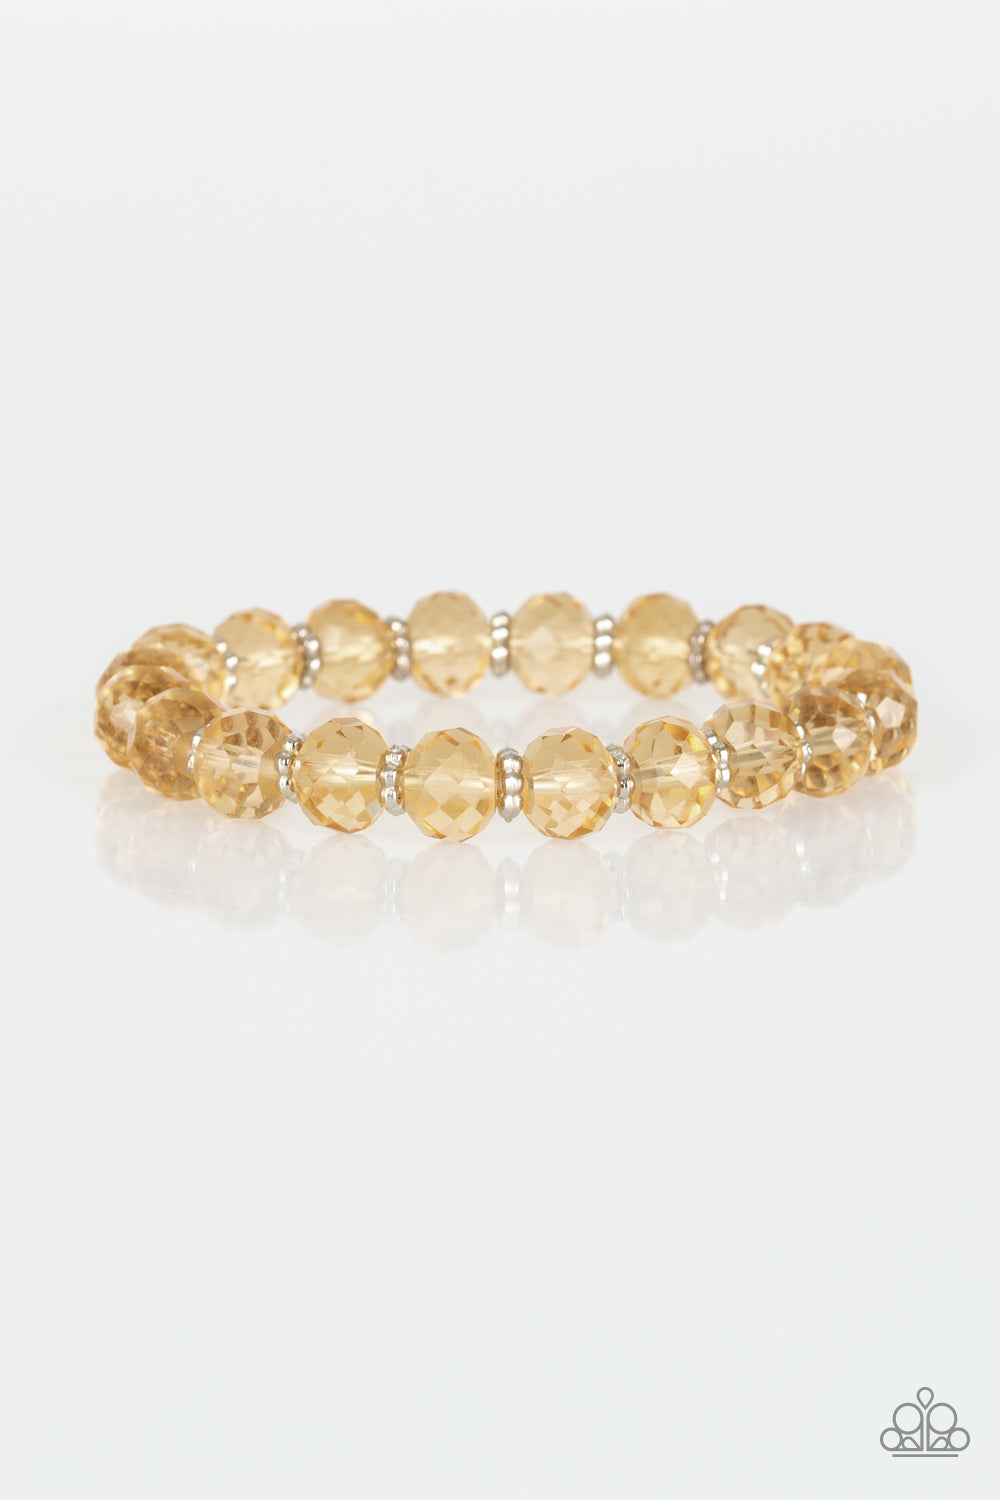 Crystal Candelabras - Gold Bracelet freeshipping - JewLz4u Gemstone Gallery